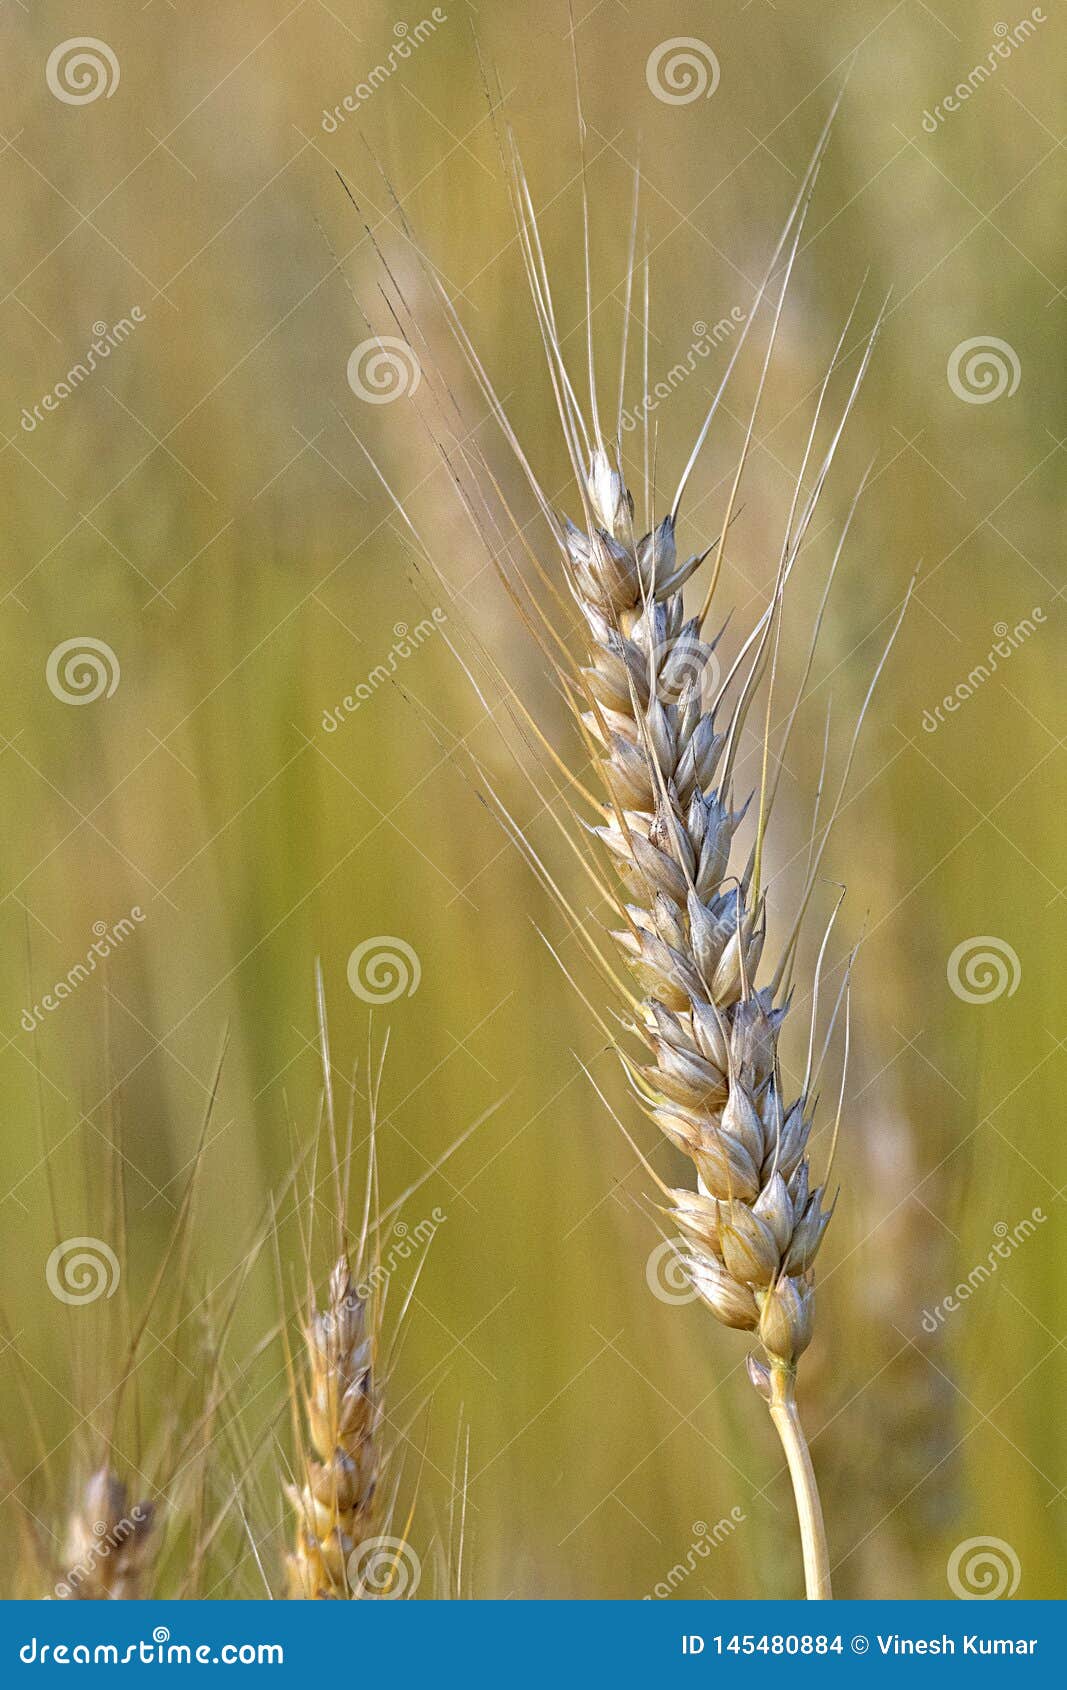 ripen pod of wheat at an indian farm